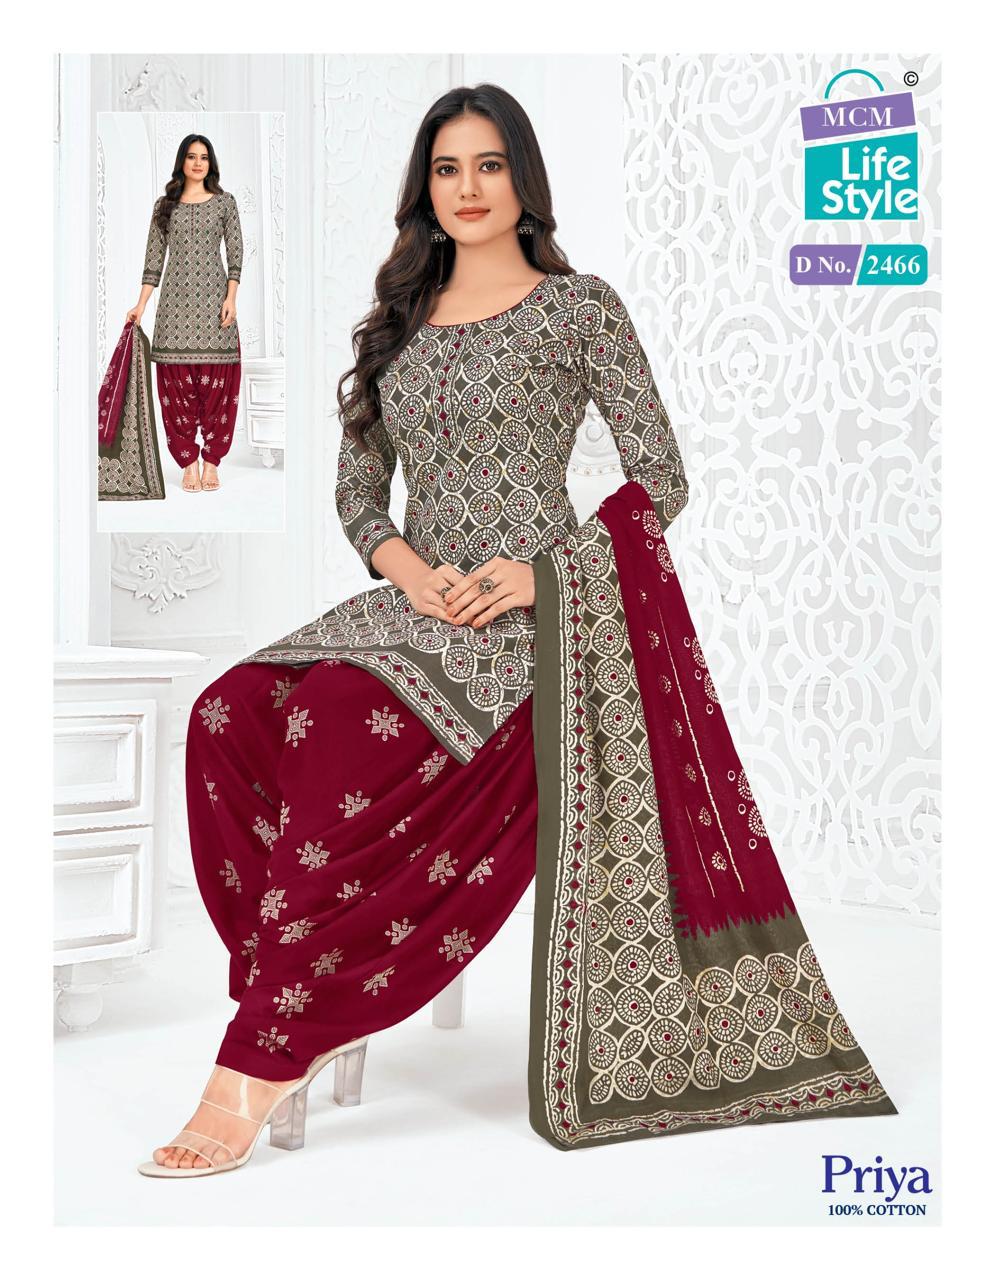 Priya Vol 24 Mcm Lifestyle Cambric Cotton Readymade Cotton Patiyala Suits Wholesale Price